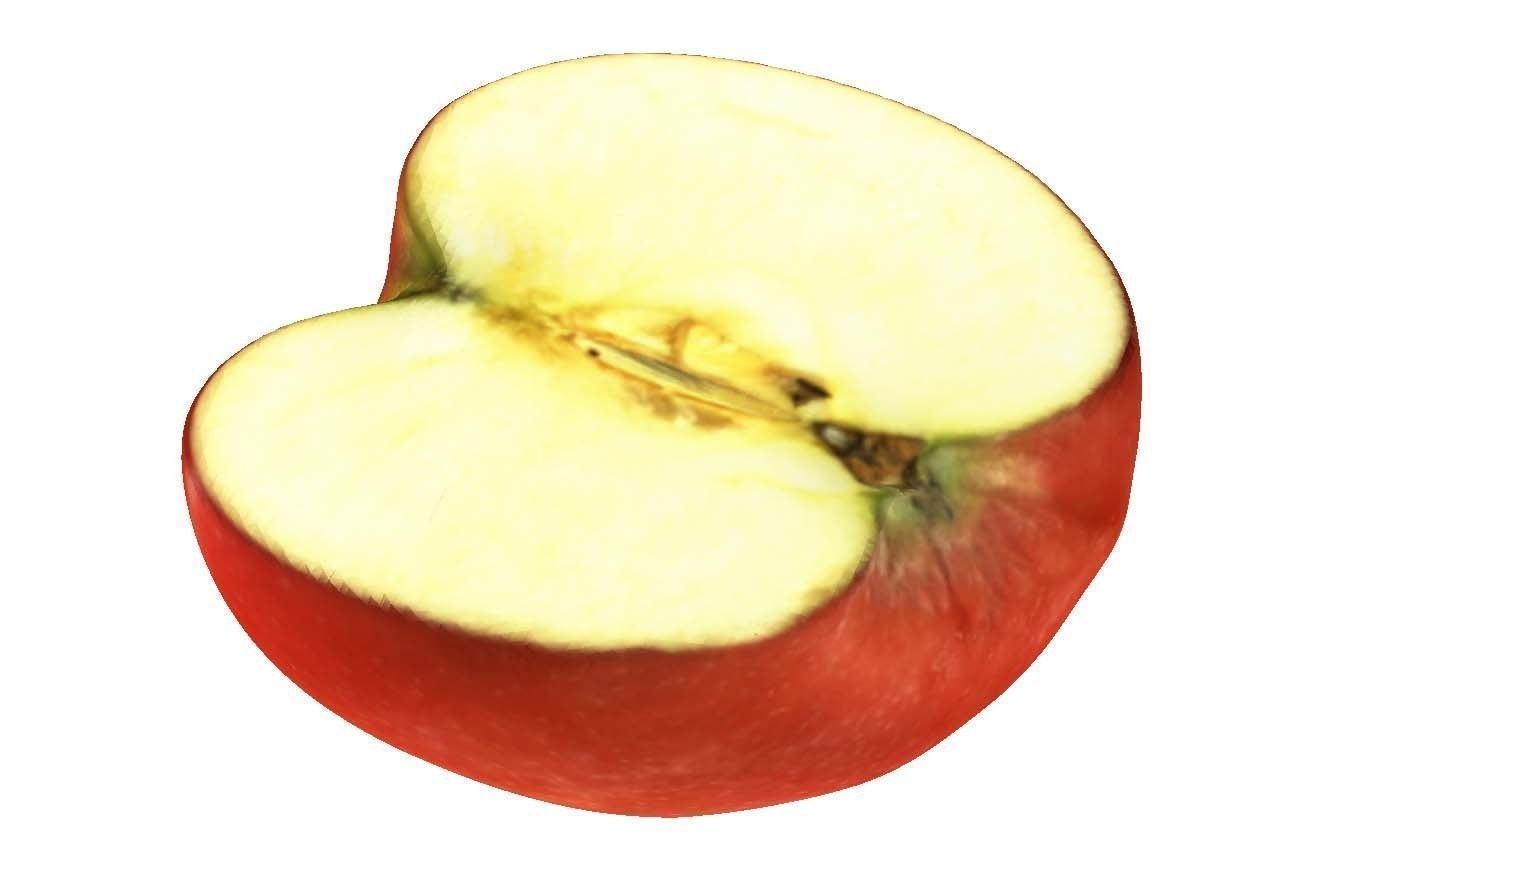 Apple Fruit Half Pictures